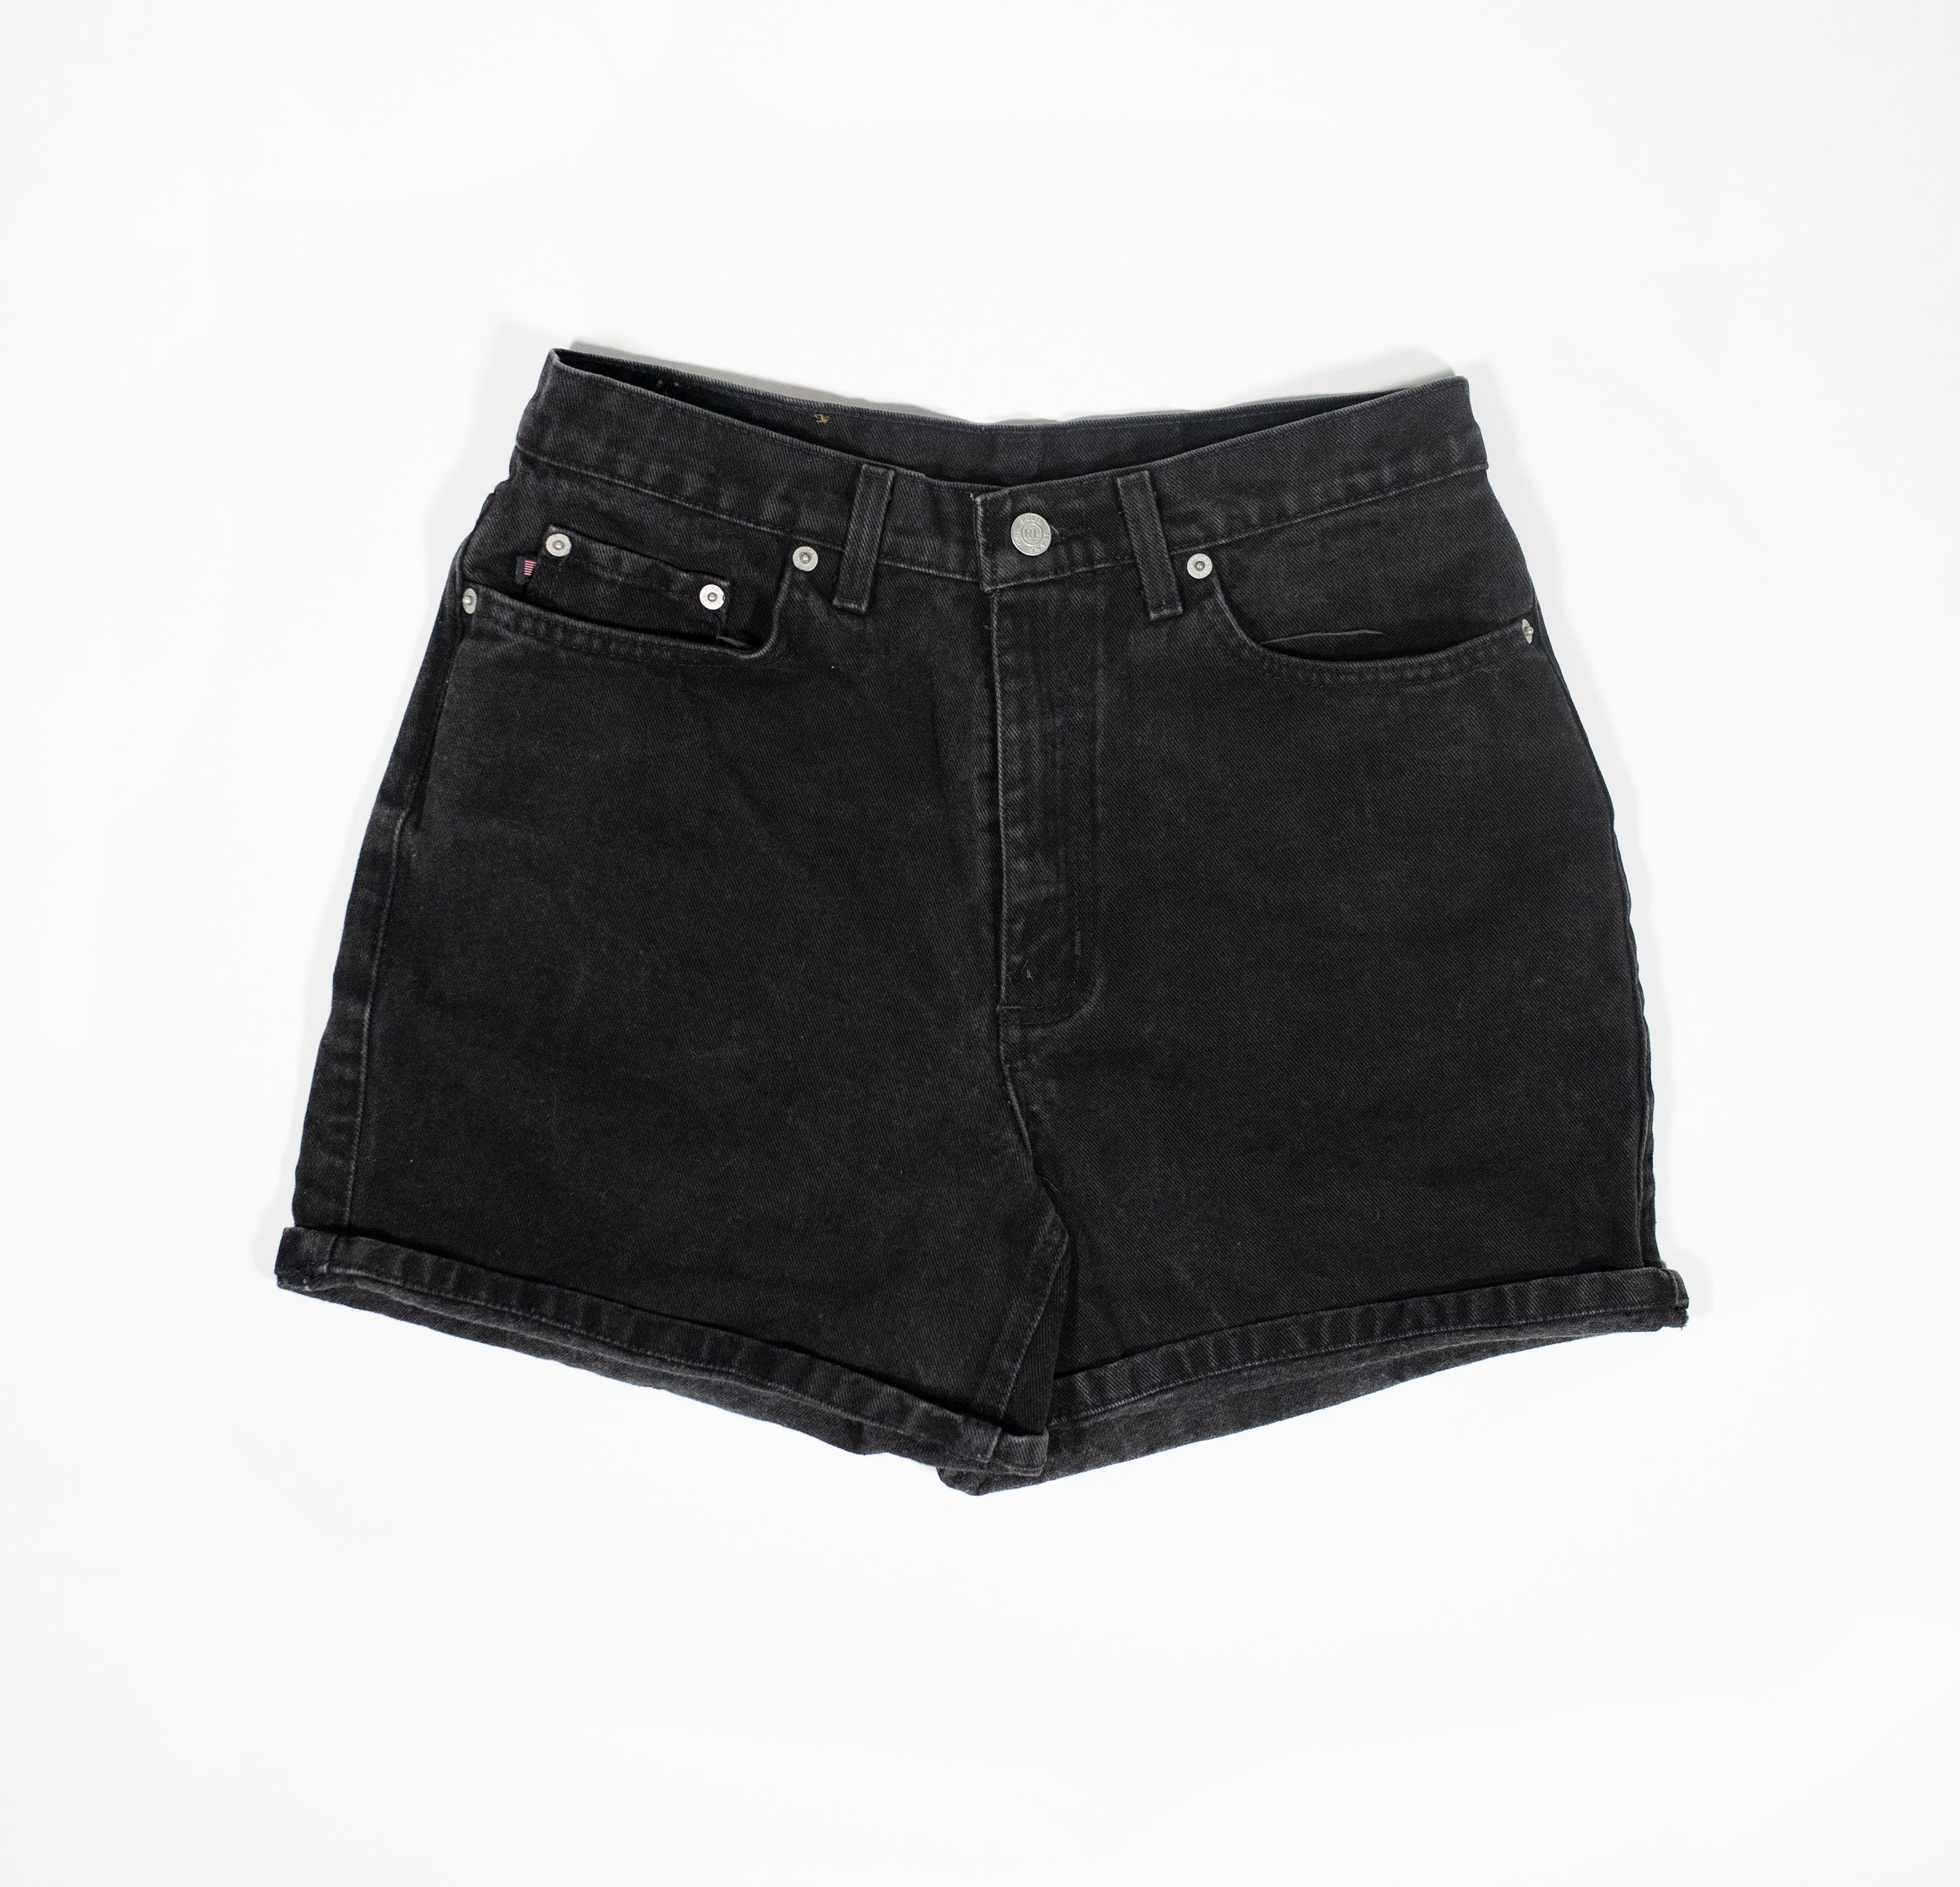 Black Polo Jean Shorts